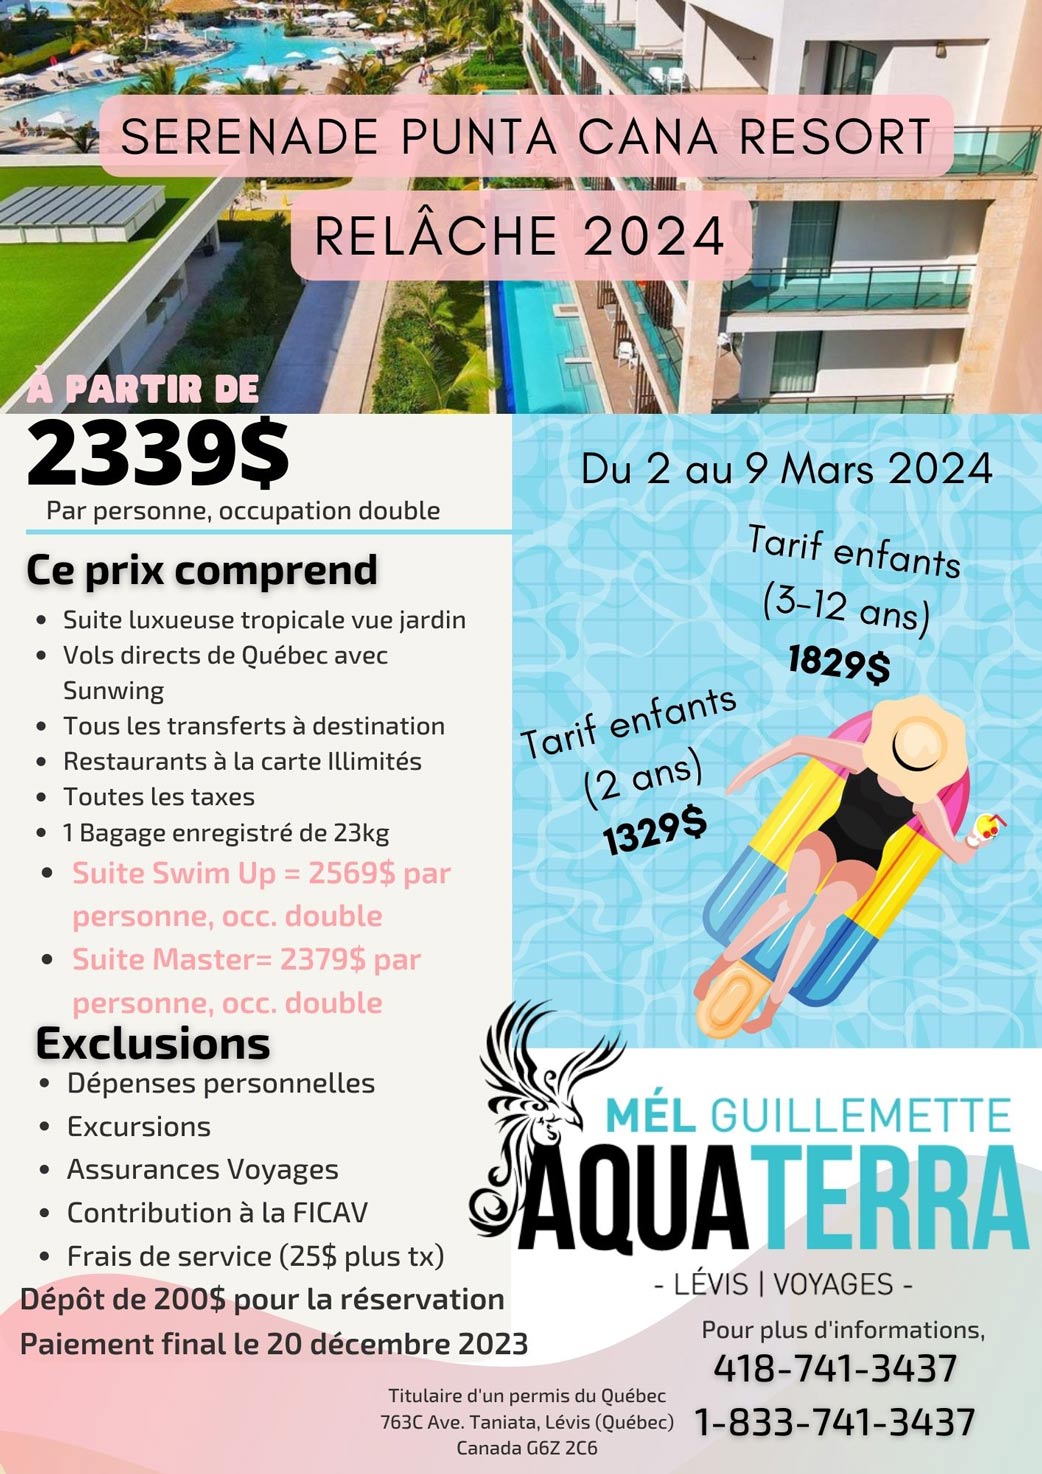 Voyage au Serenade Punta Cana Resort du 2 au 9 mars 2024